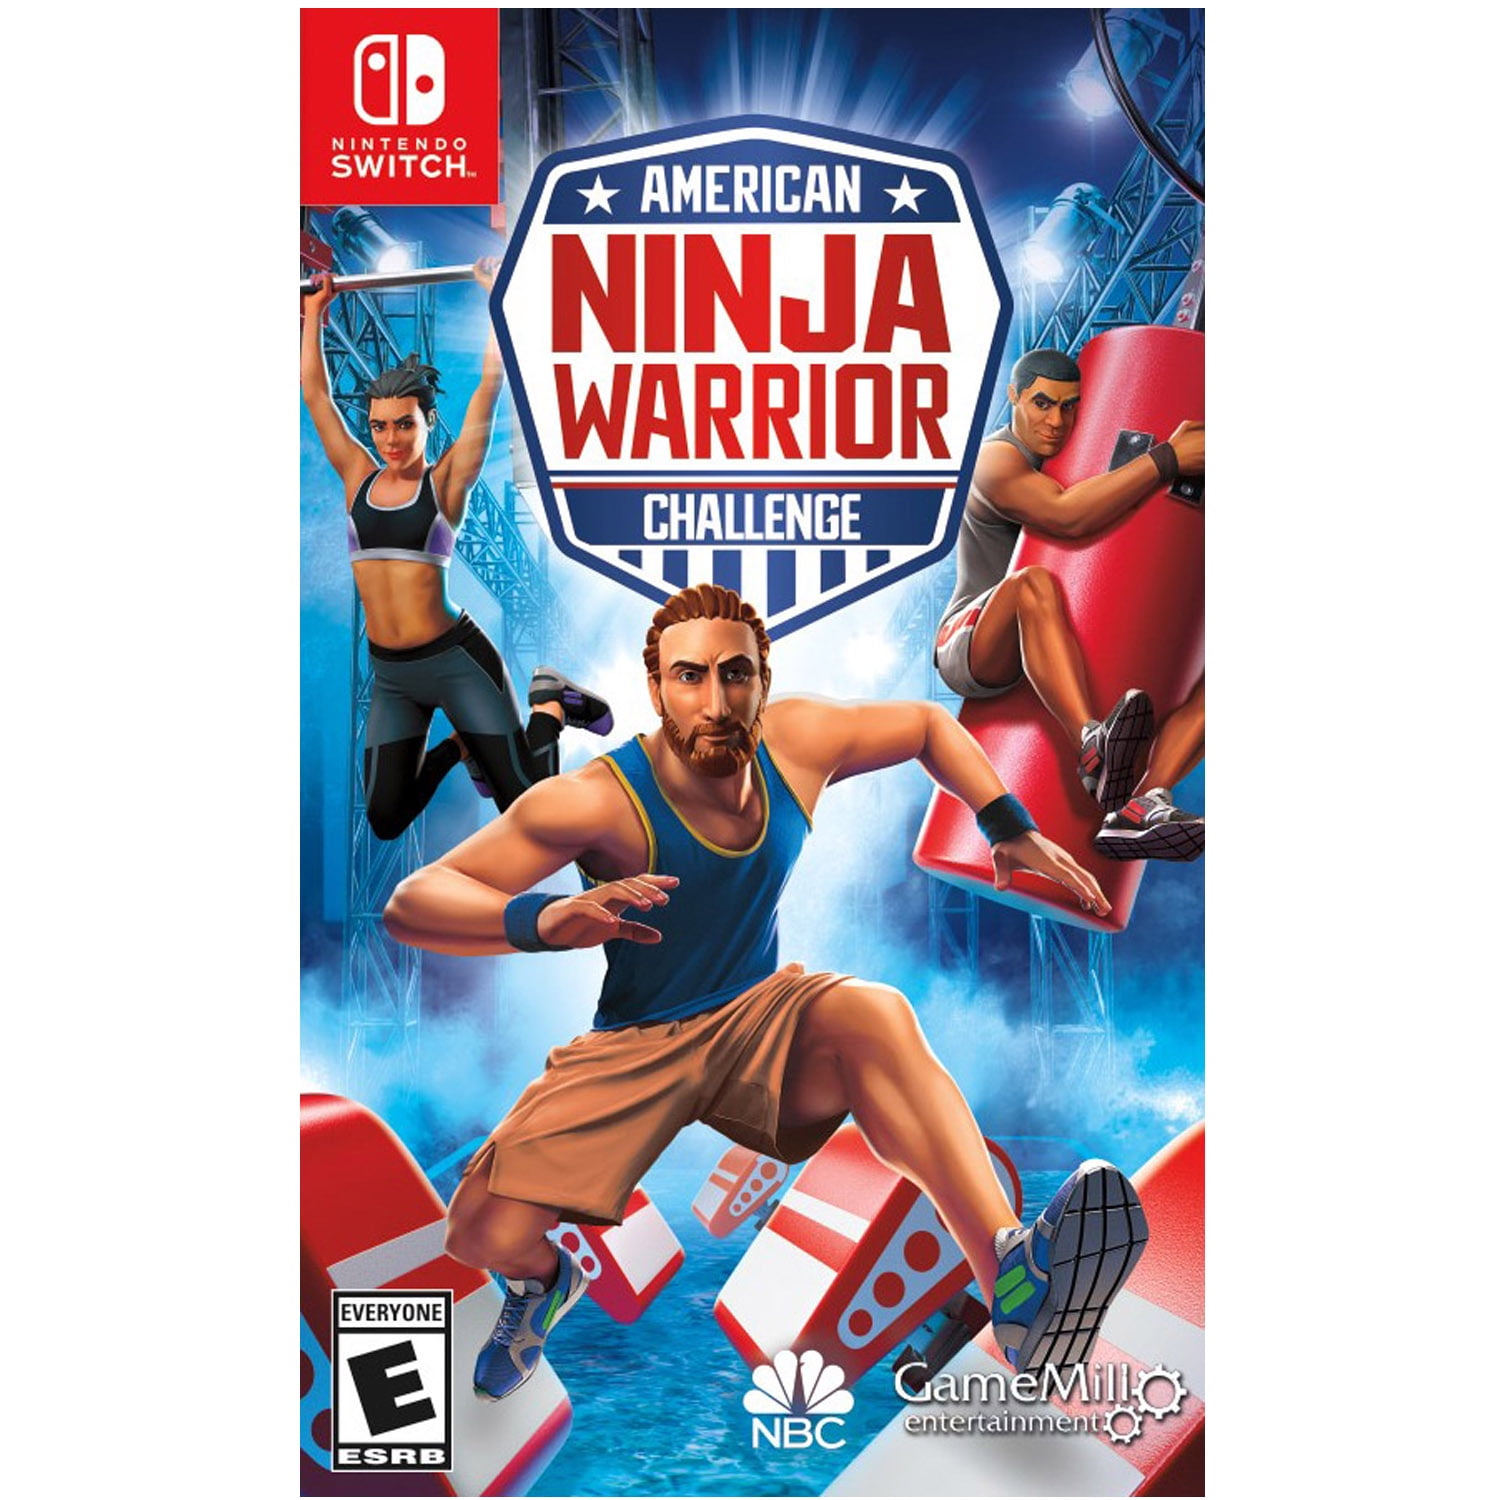 American Ninja Warrior Gamemill Nintendo Switch 856131008053